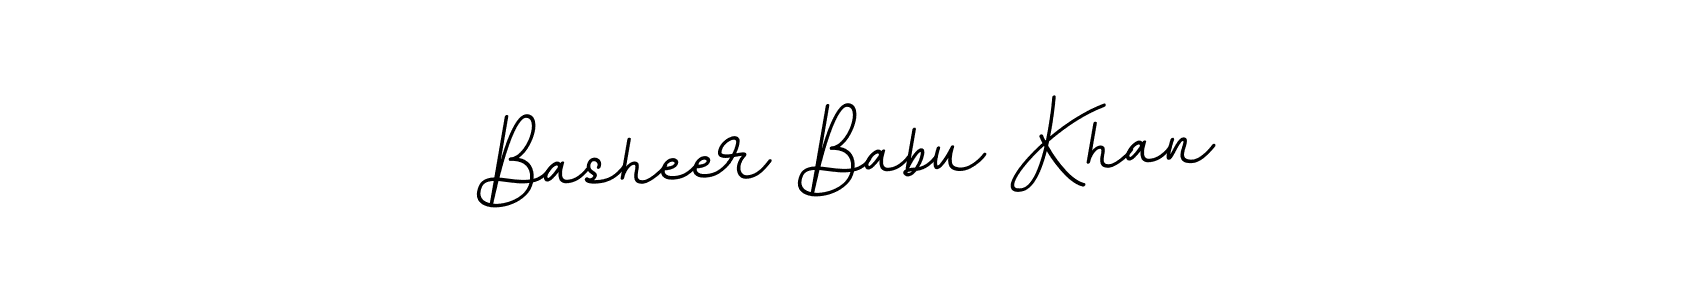 How to Draw Basheer Babu Khan signature style? BallpointsItalic-DORy9 is a latest design signature styles for name Basheer Babu Khan. Basheer Babu Khan signature style 11 images and pictures png